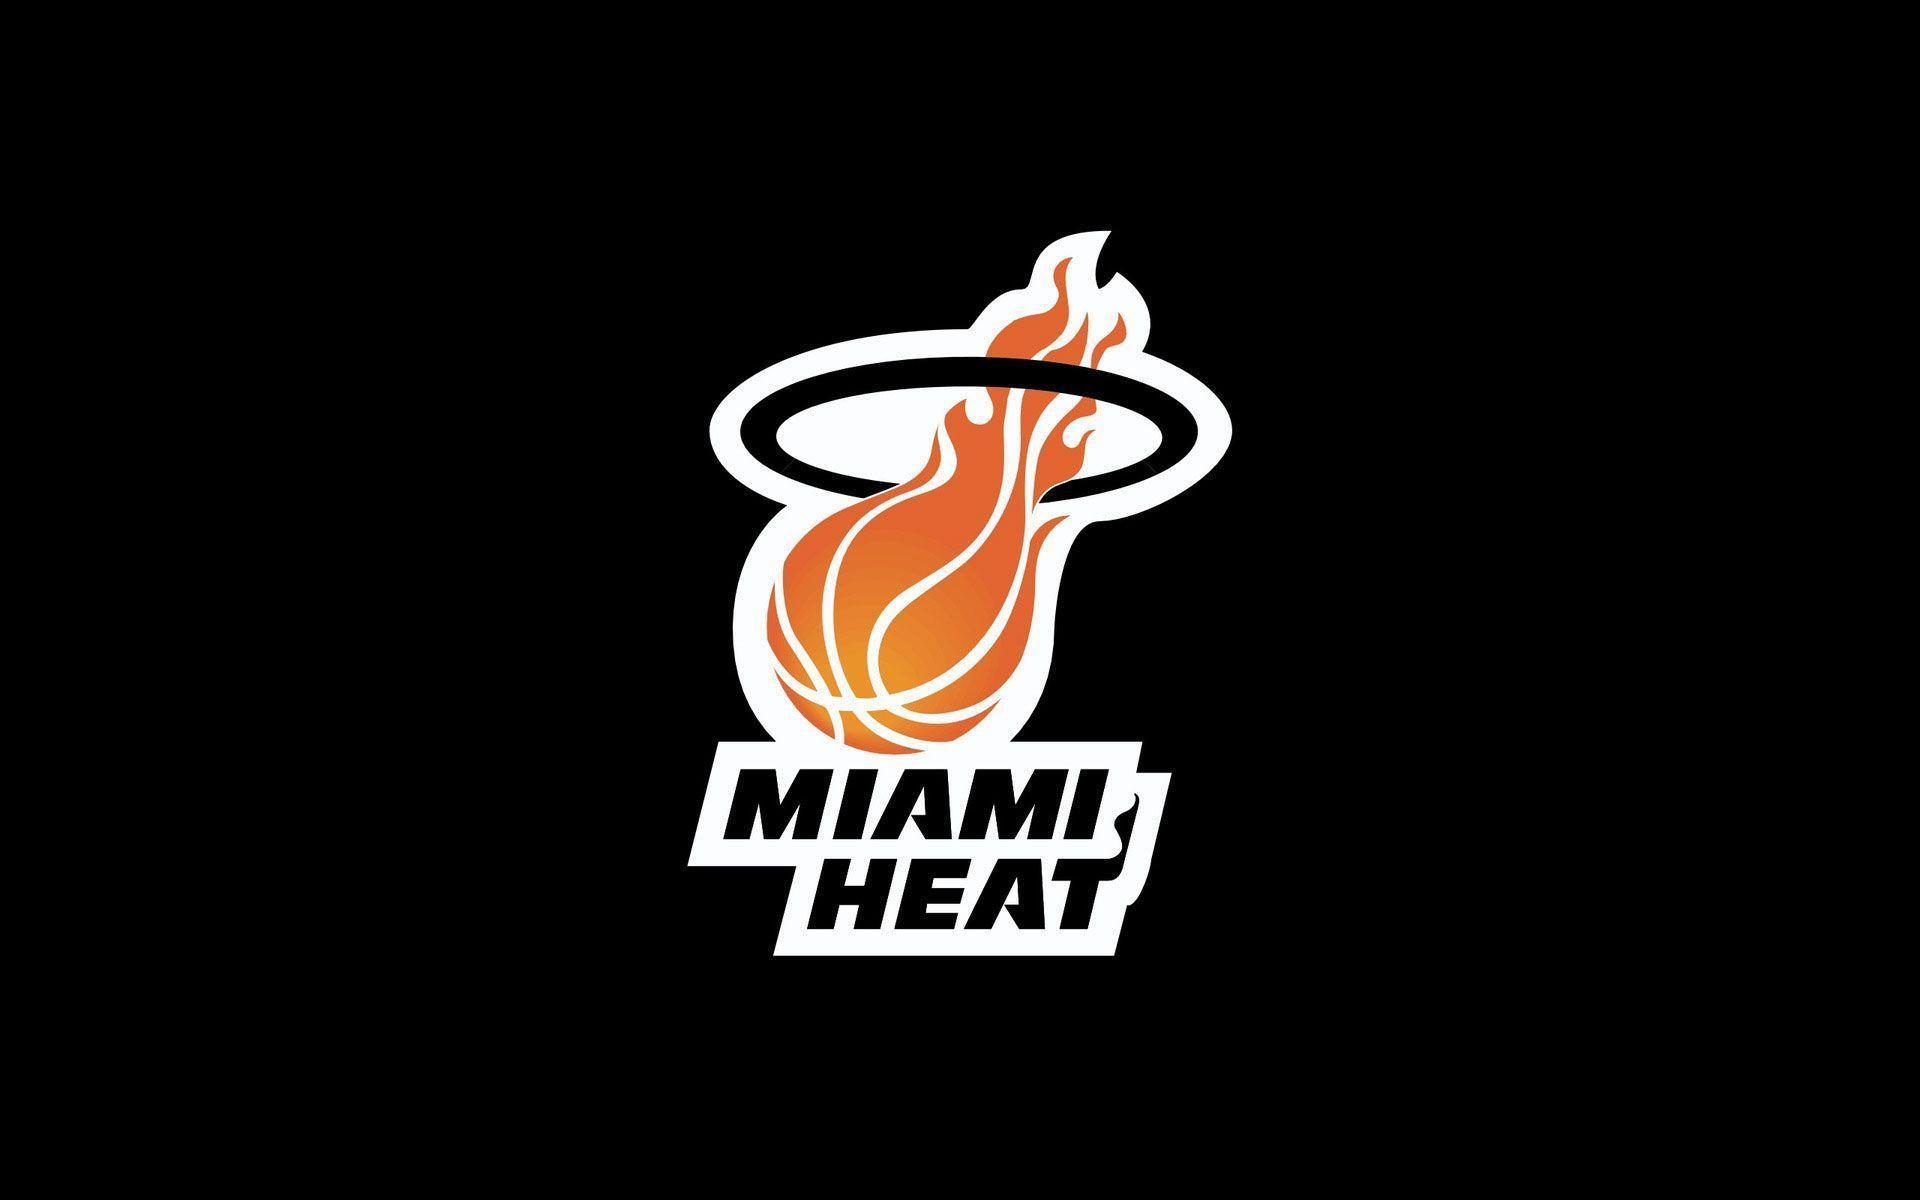 Miami Heat Logo 7 87744 Image HD Wallpaper. Wallfoy.com